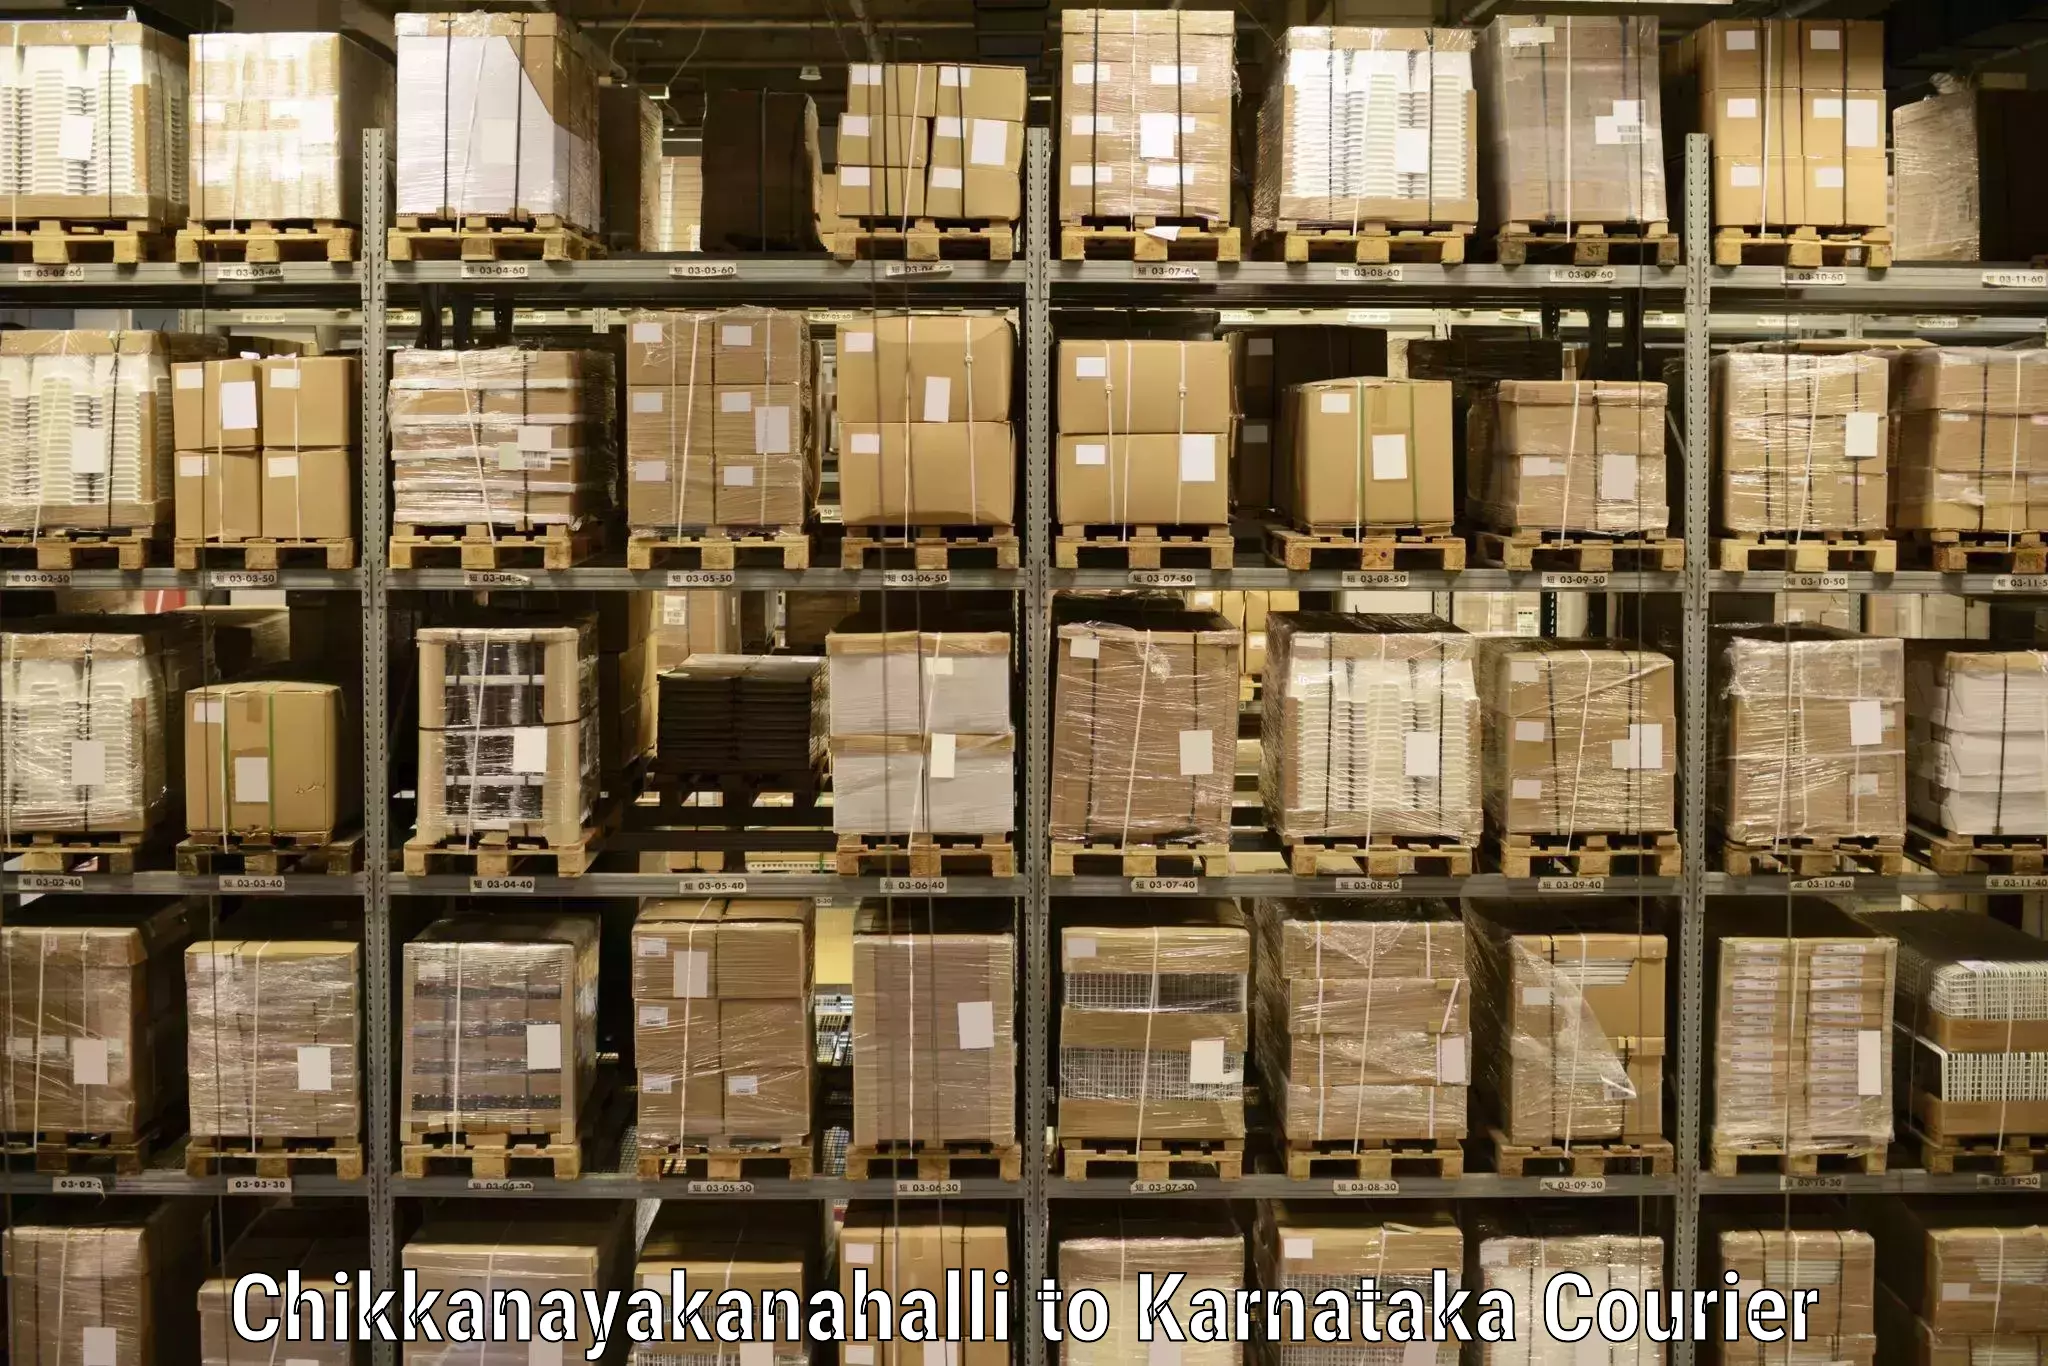 Cargo delivery service Chikkanayakanahalli to Toranagallu